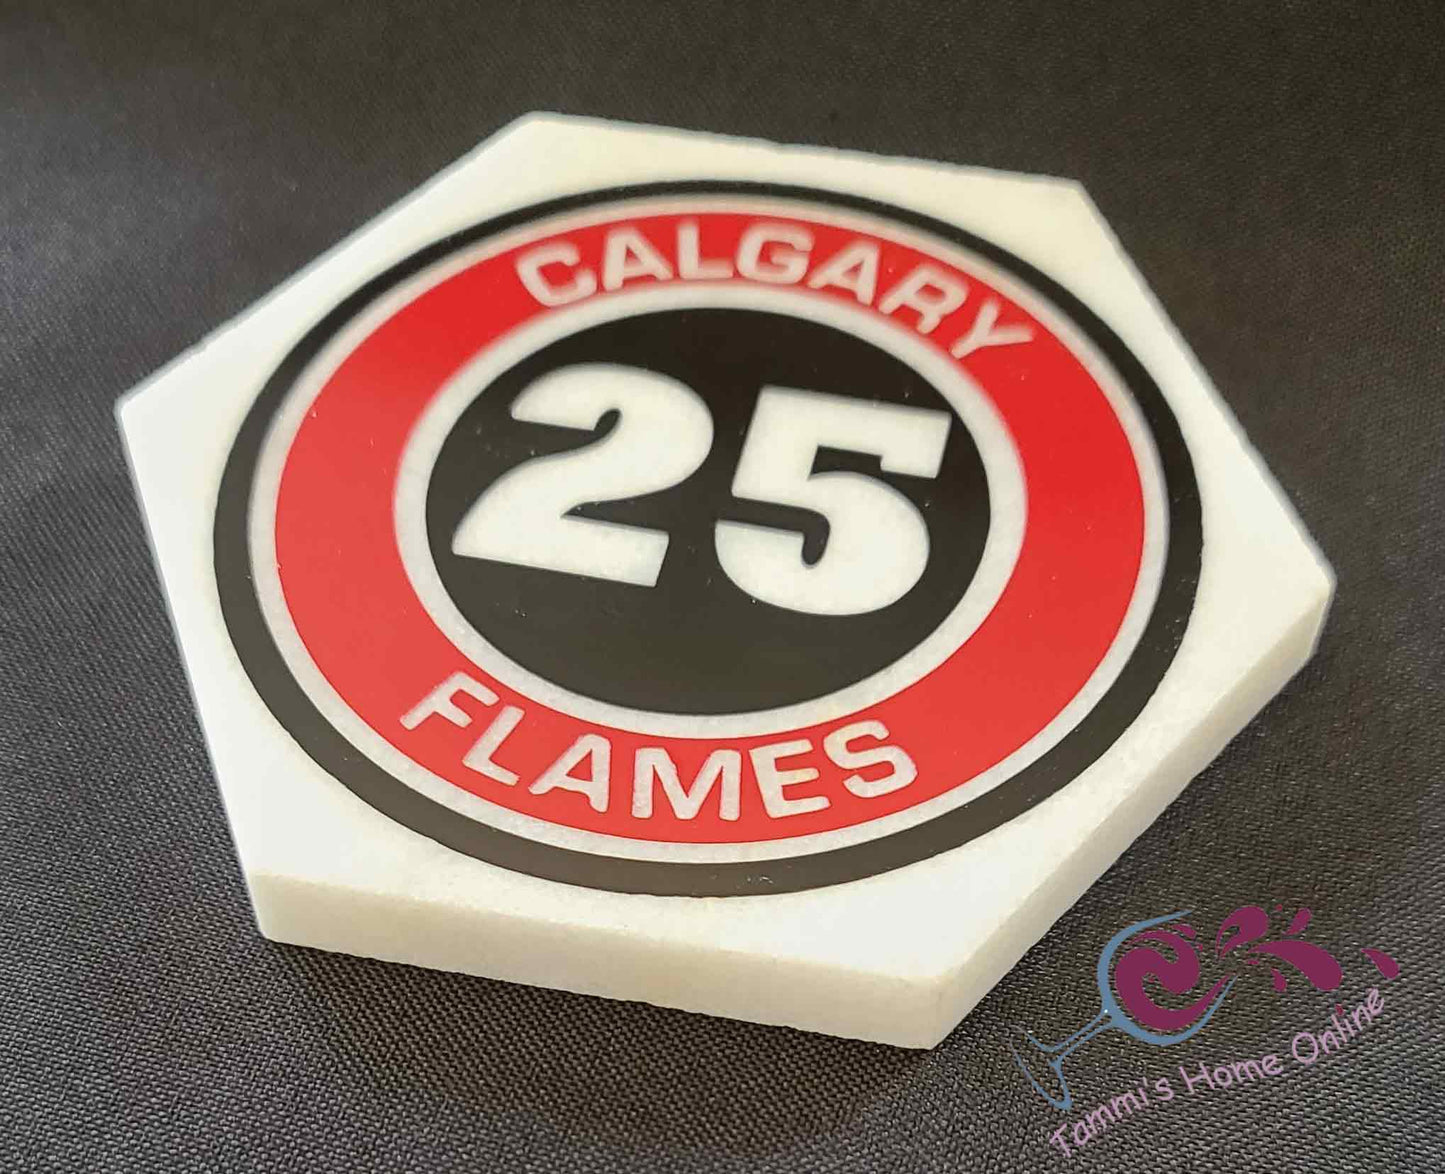 Calgary Flames #25 - Jacob Markstrom - Marble Coaster